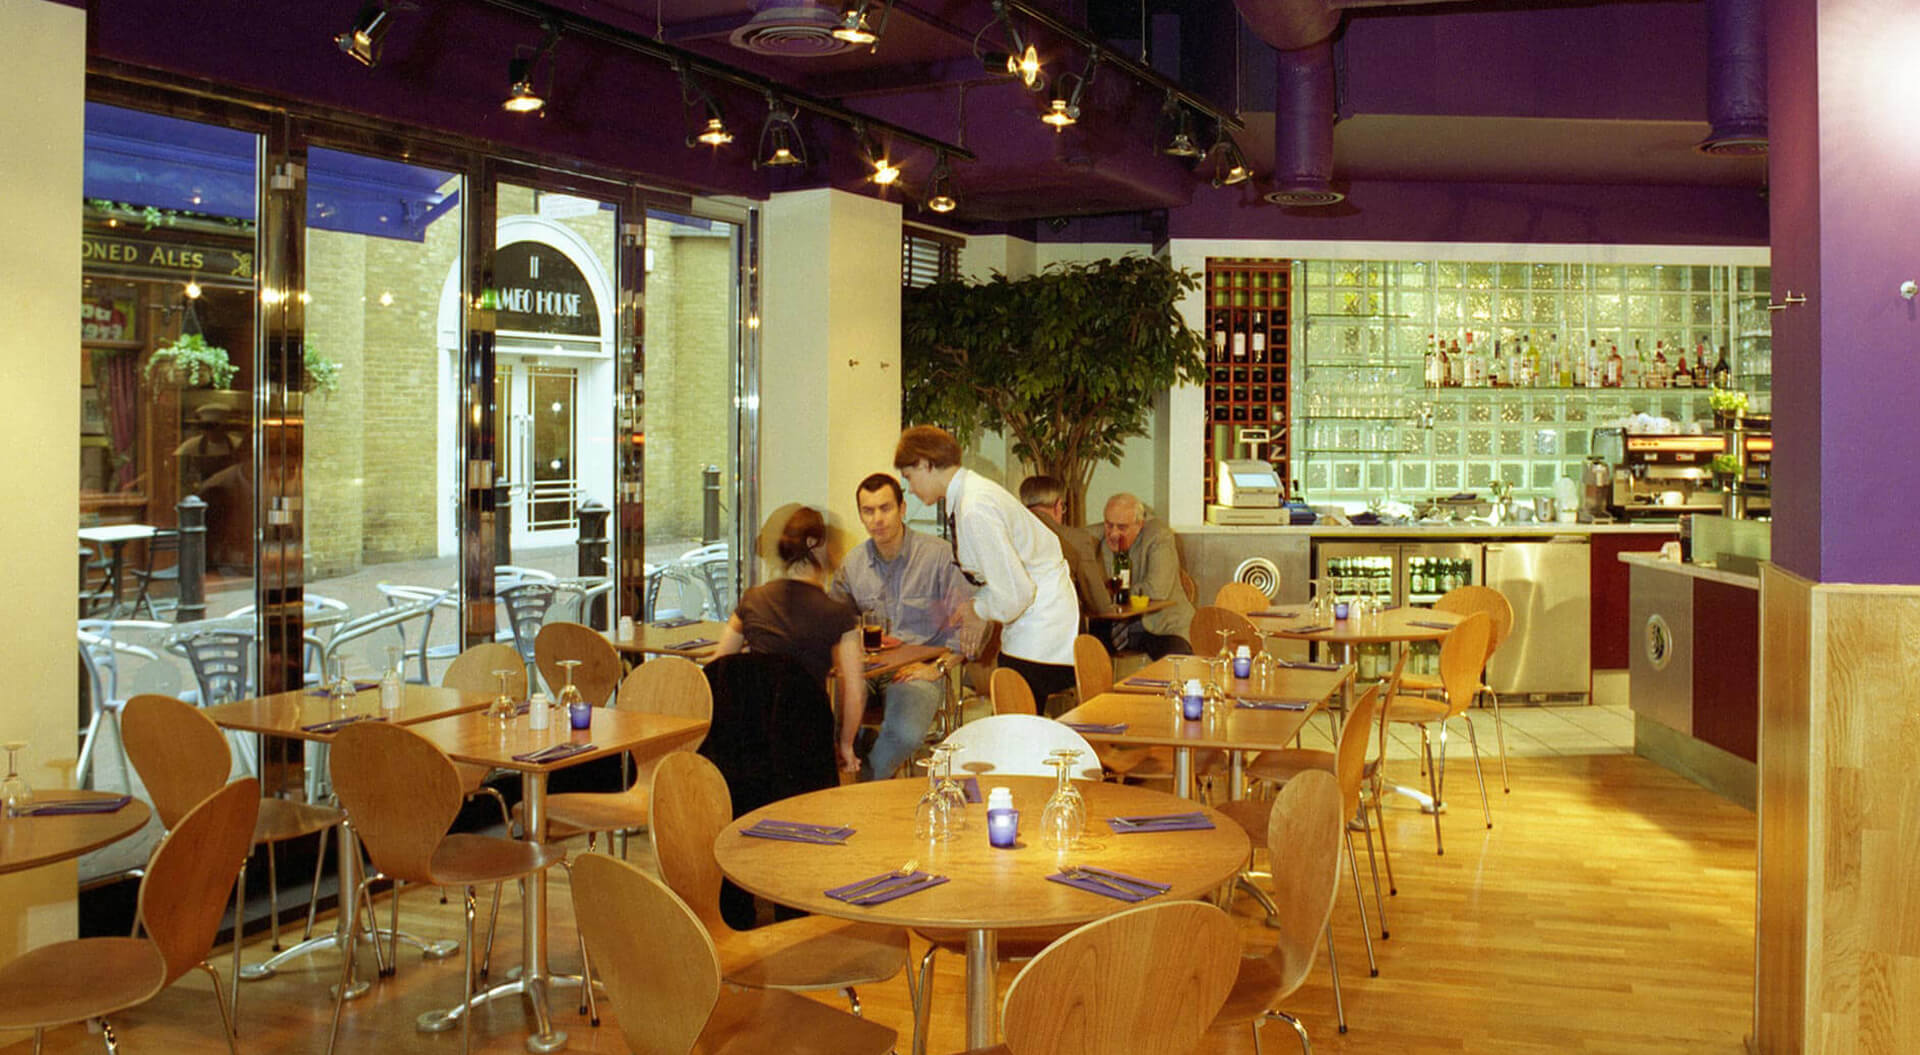 Caffe Piazza restaurant interior design 